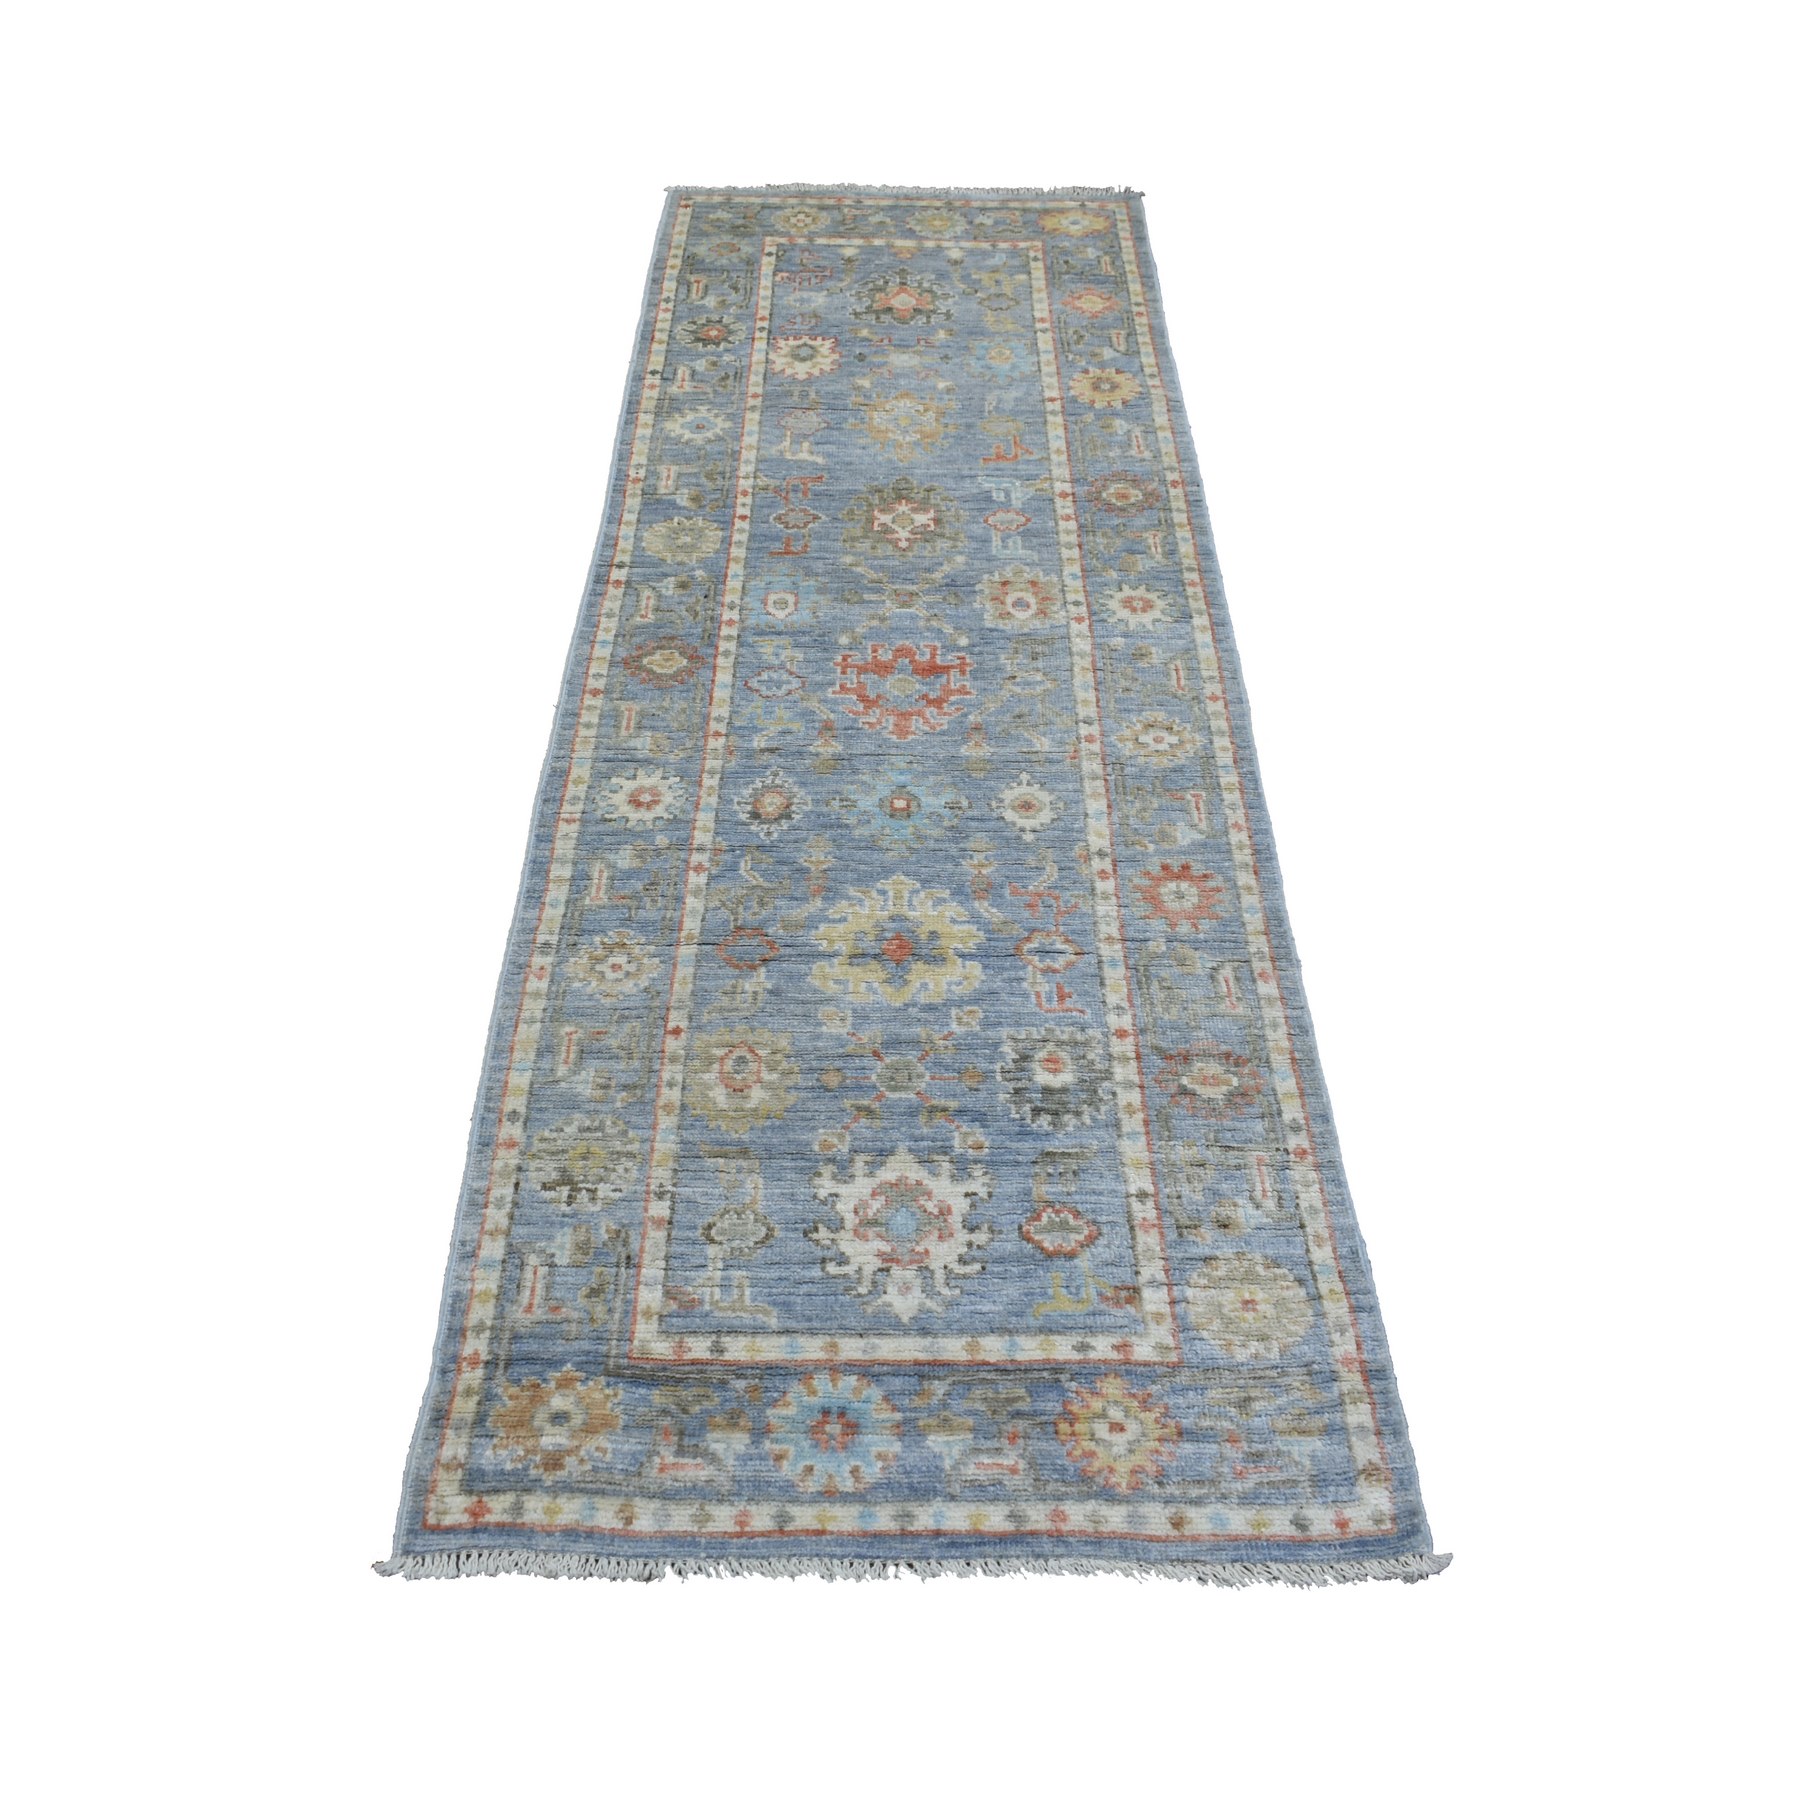 2'8"x7'8" Denim Blue Afghan Angora Ushak with Colorful Geometric Leaf Design Hand Woven Soft, Natural Wool Oriental Runner Rug 